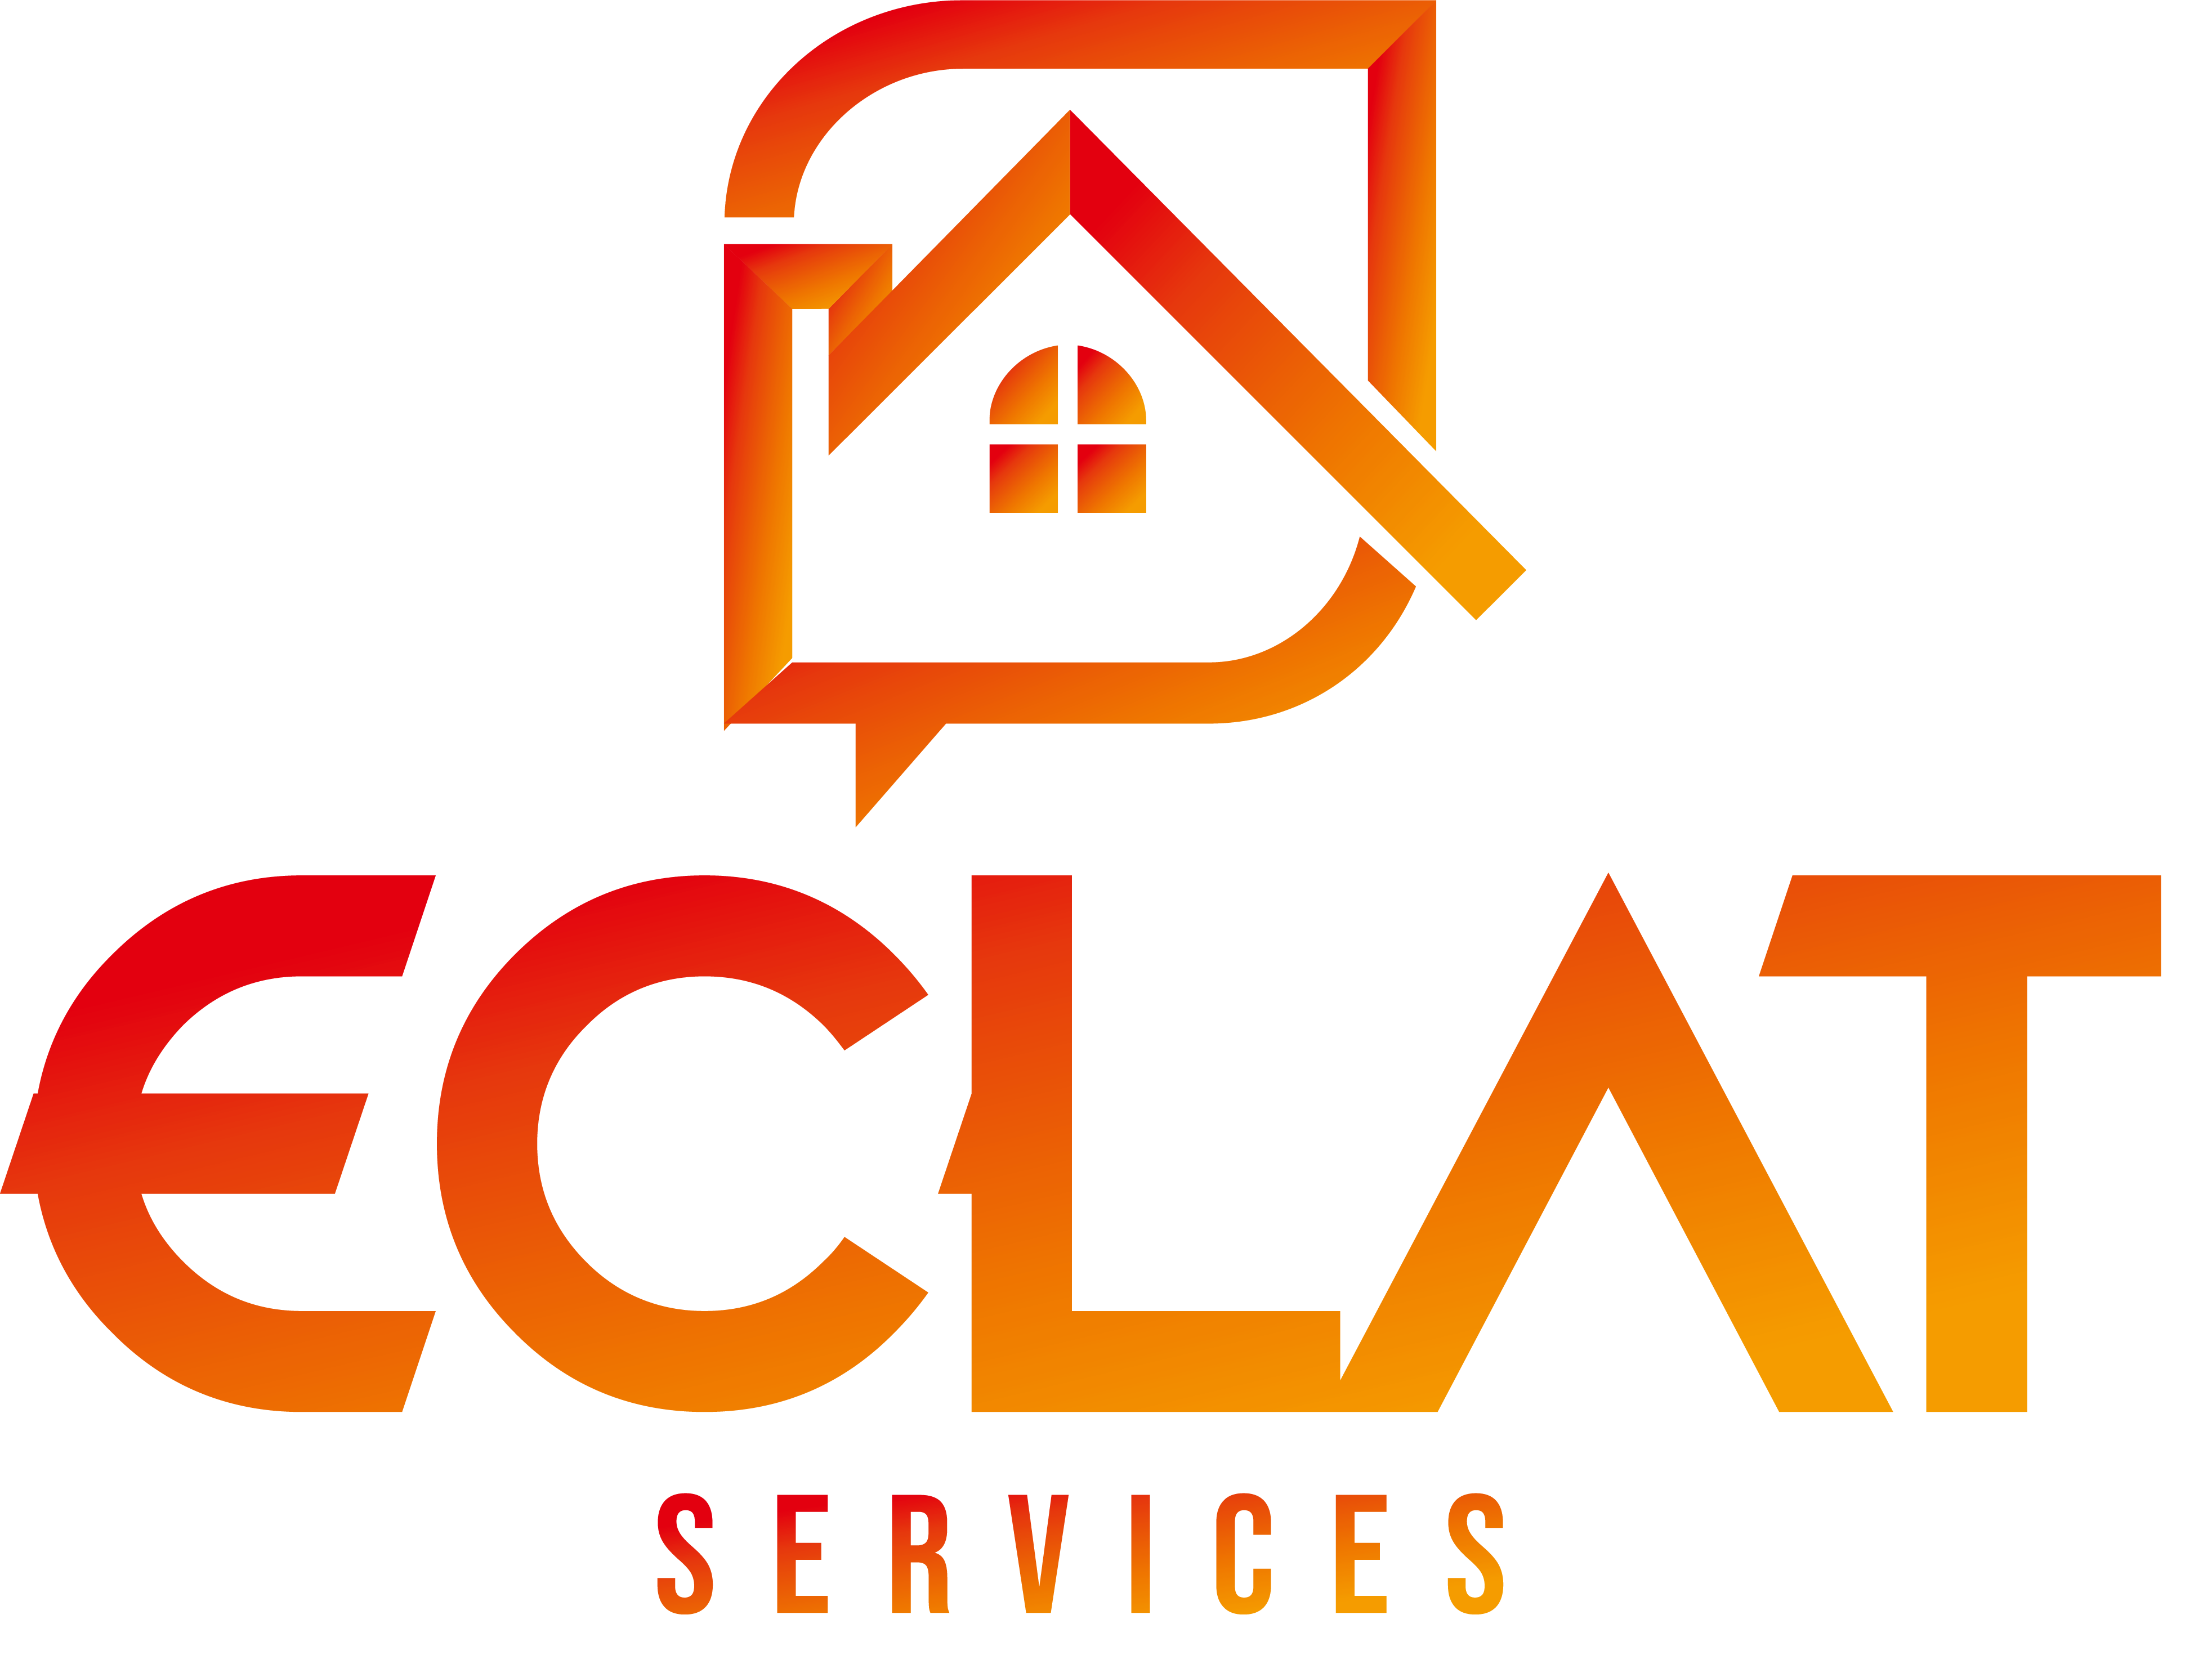 Eclat Services